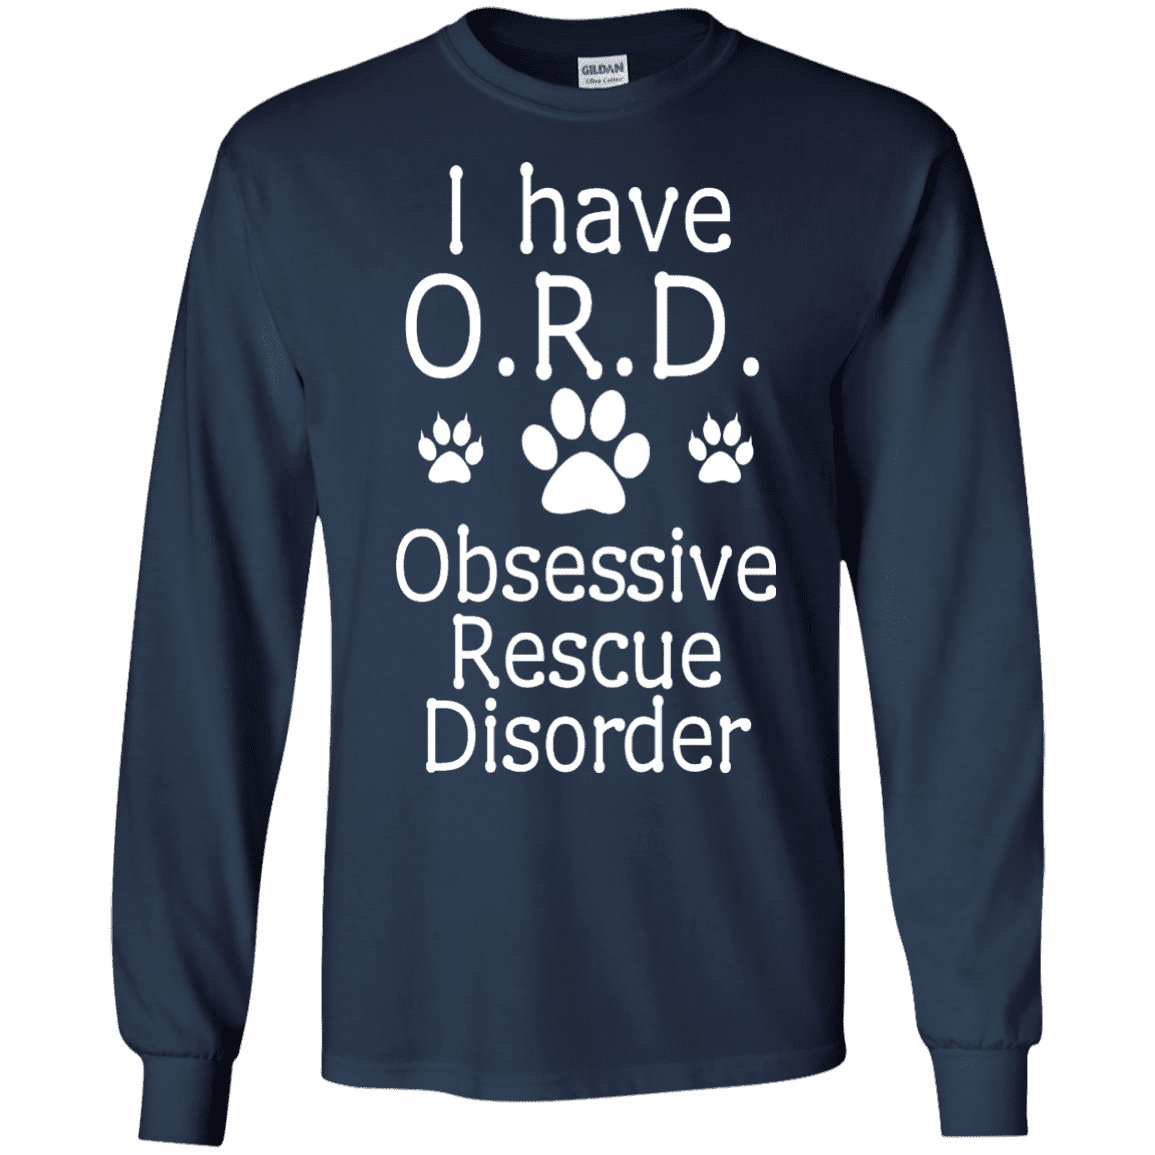 I Have O.R.D - Long Sleeve T Shirt.